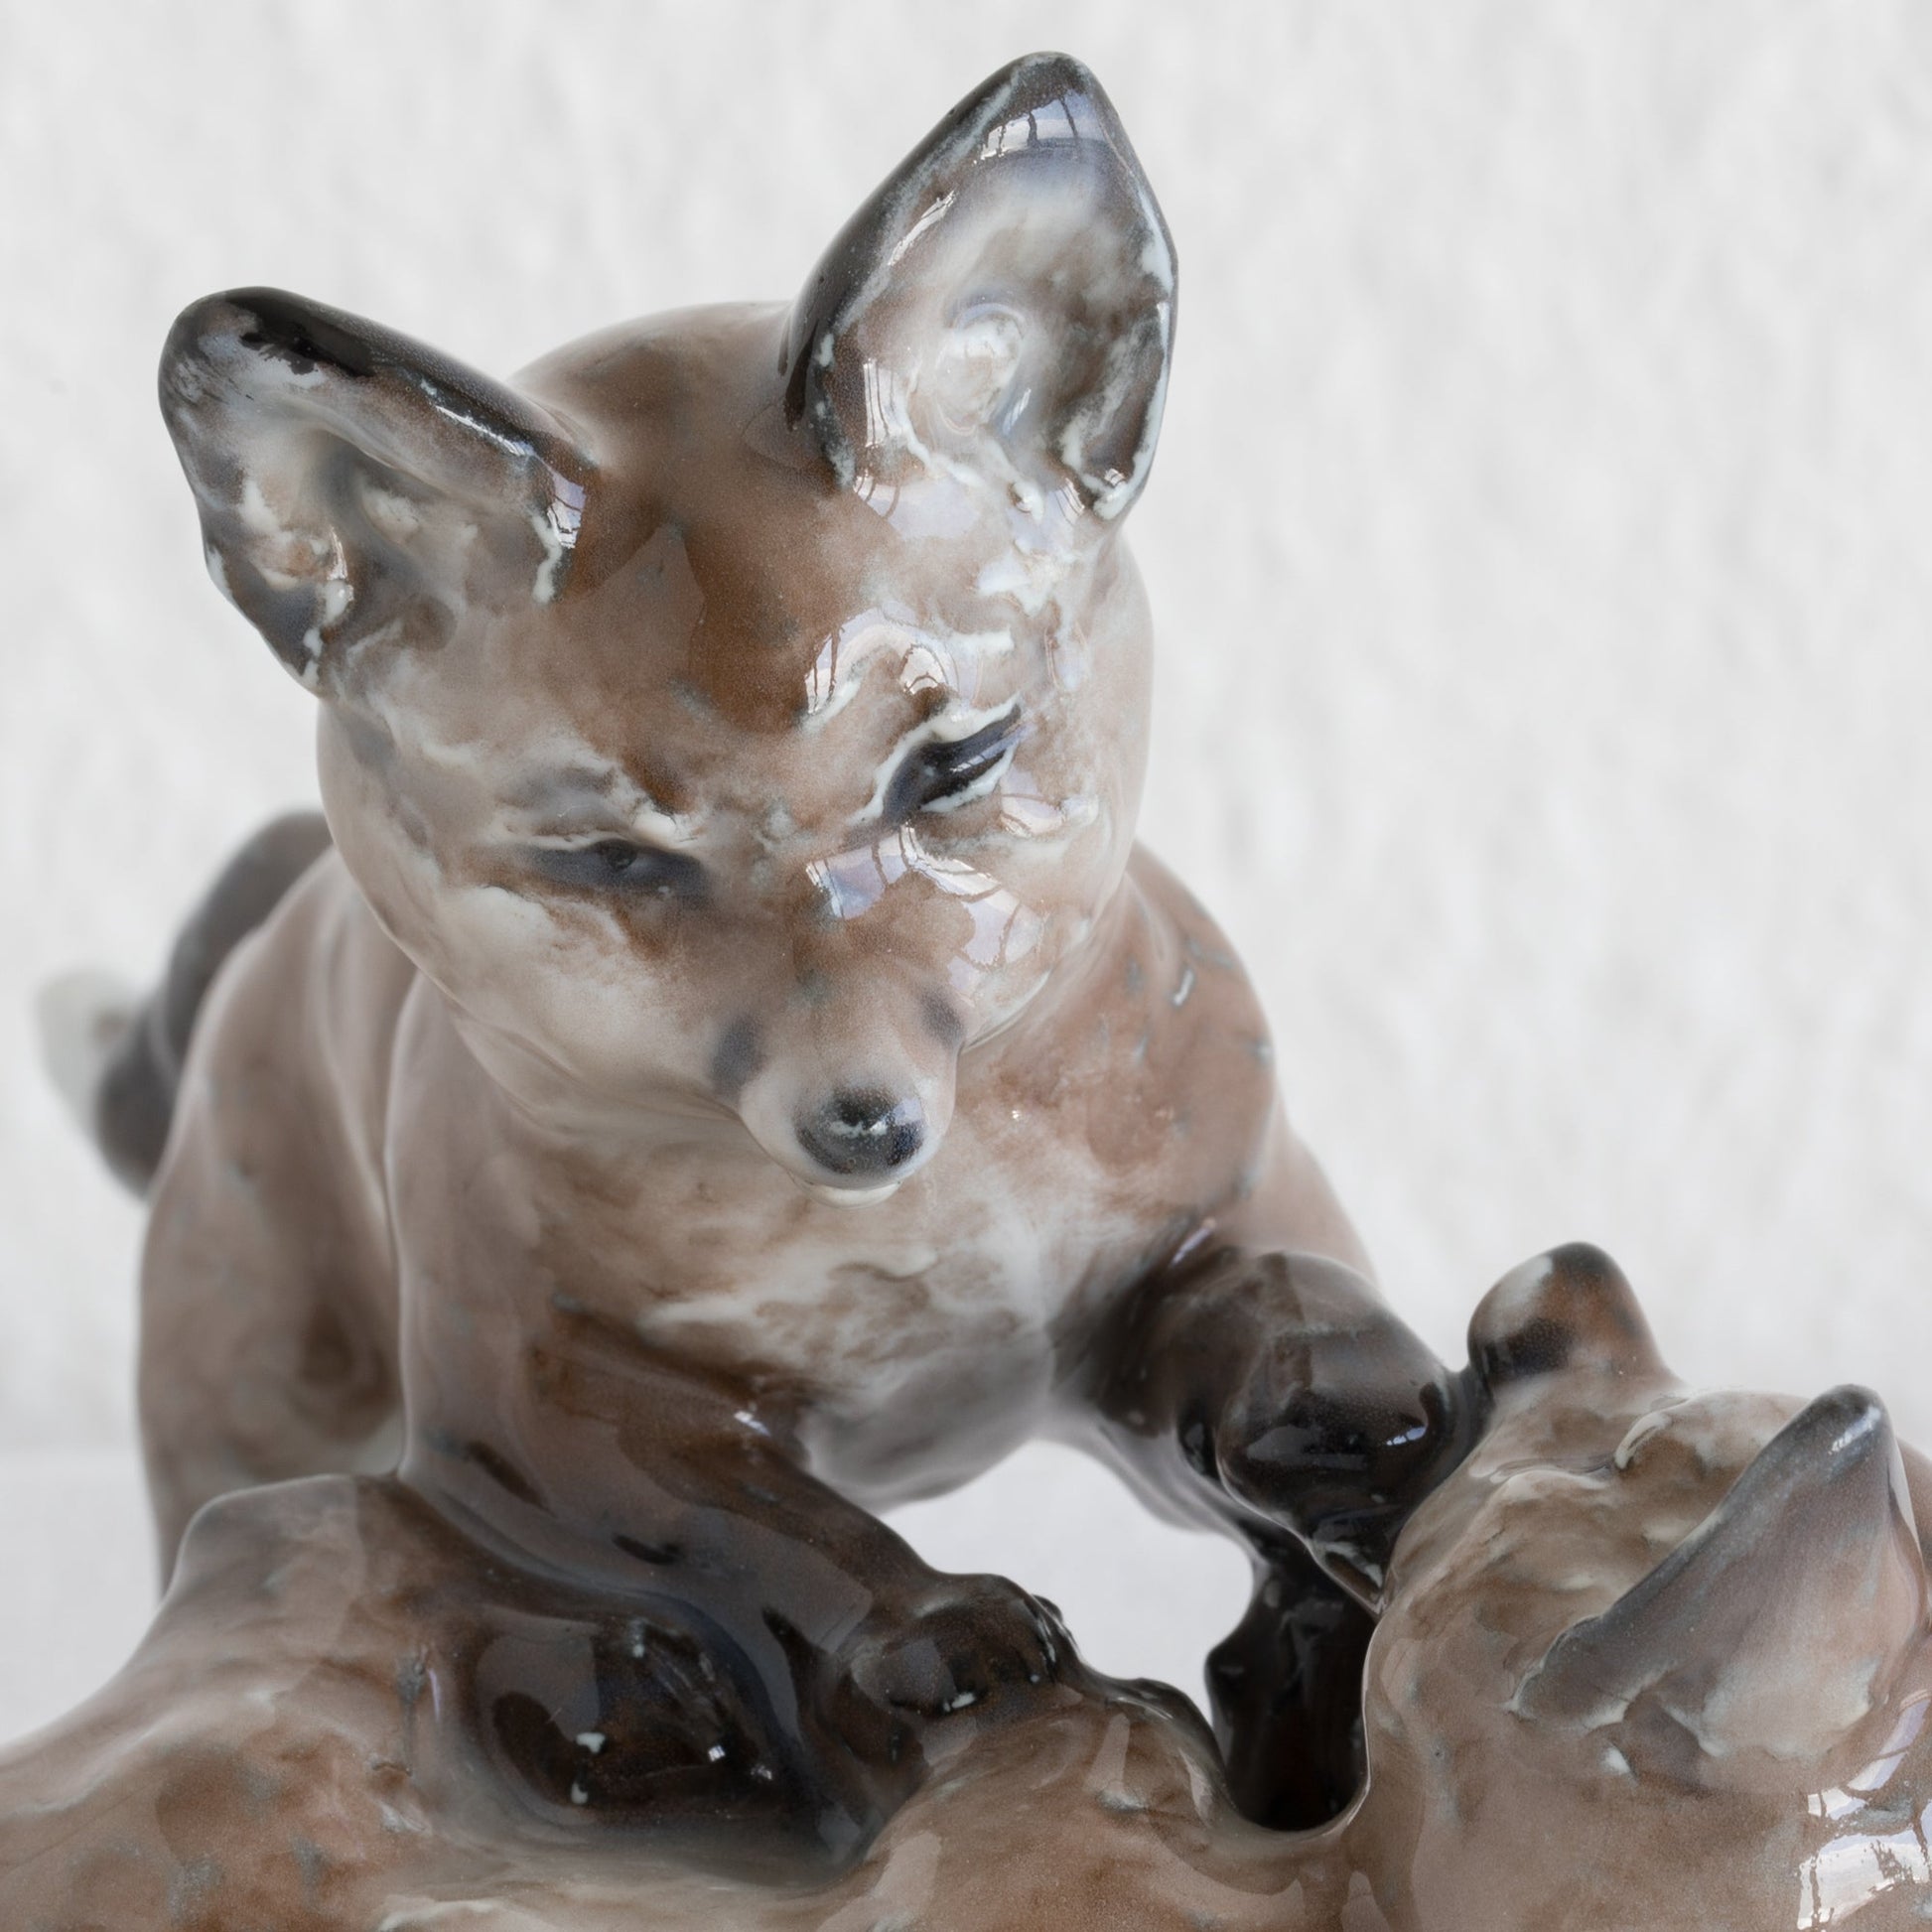 FRITZ HEIDENREICH Rosenthal Decorated Porcelain Playing Fox Kits Figurine Mollaris.com 